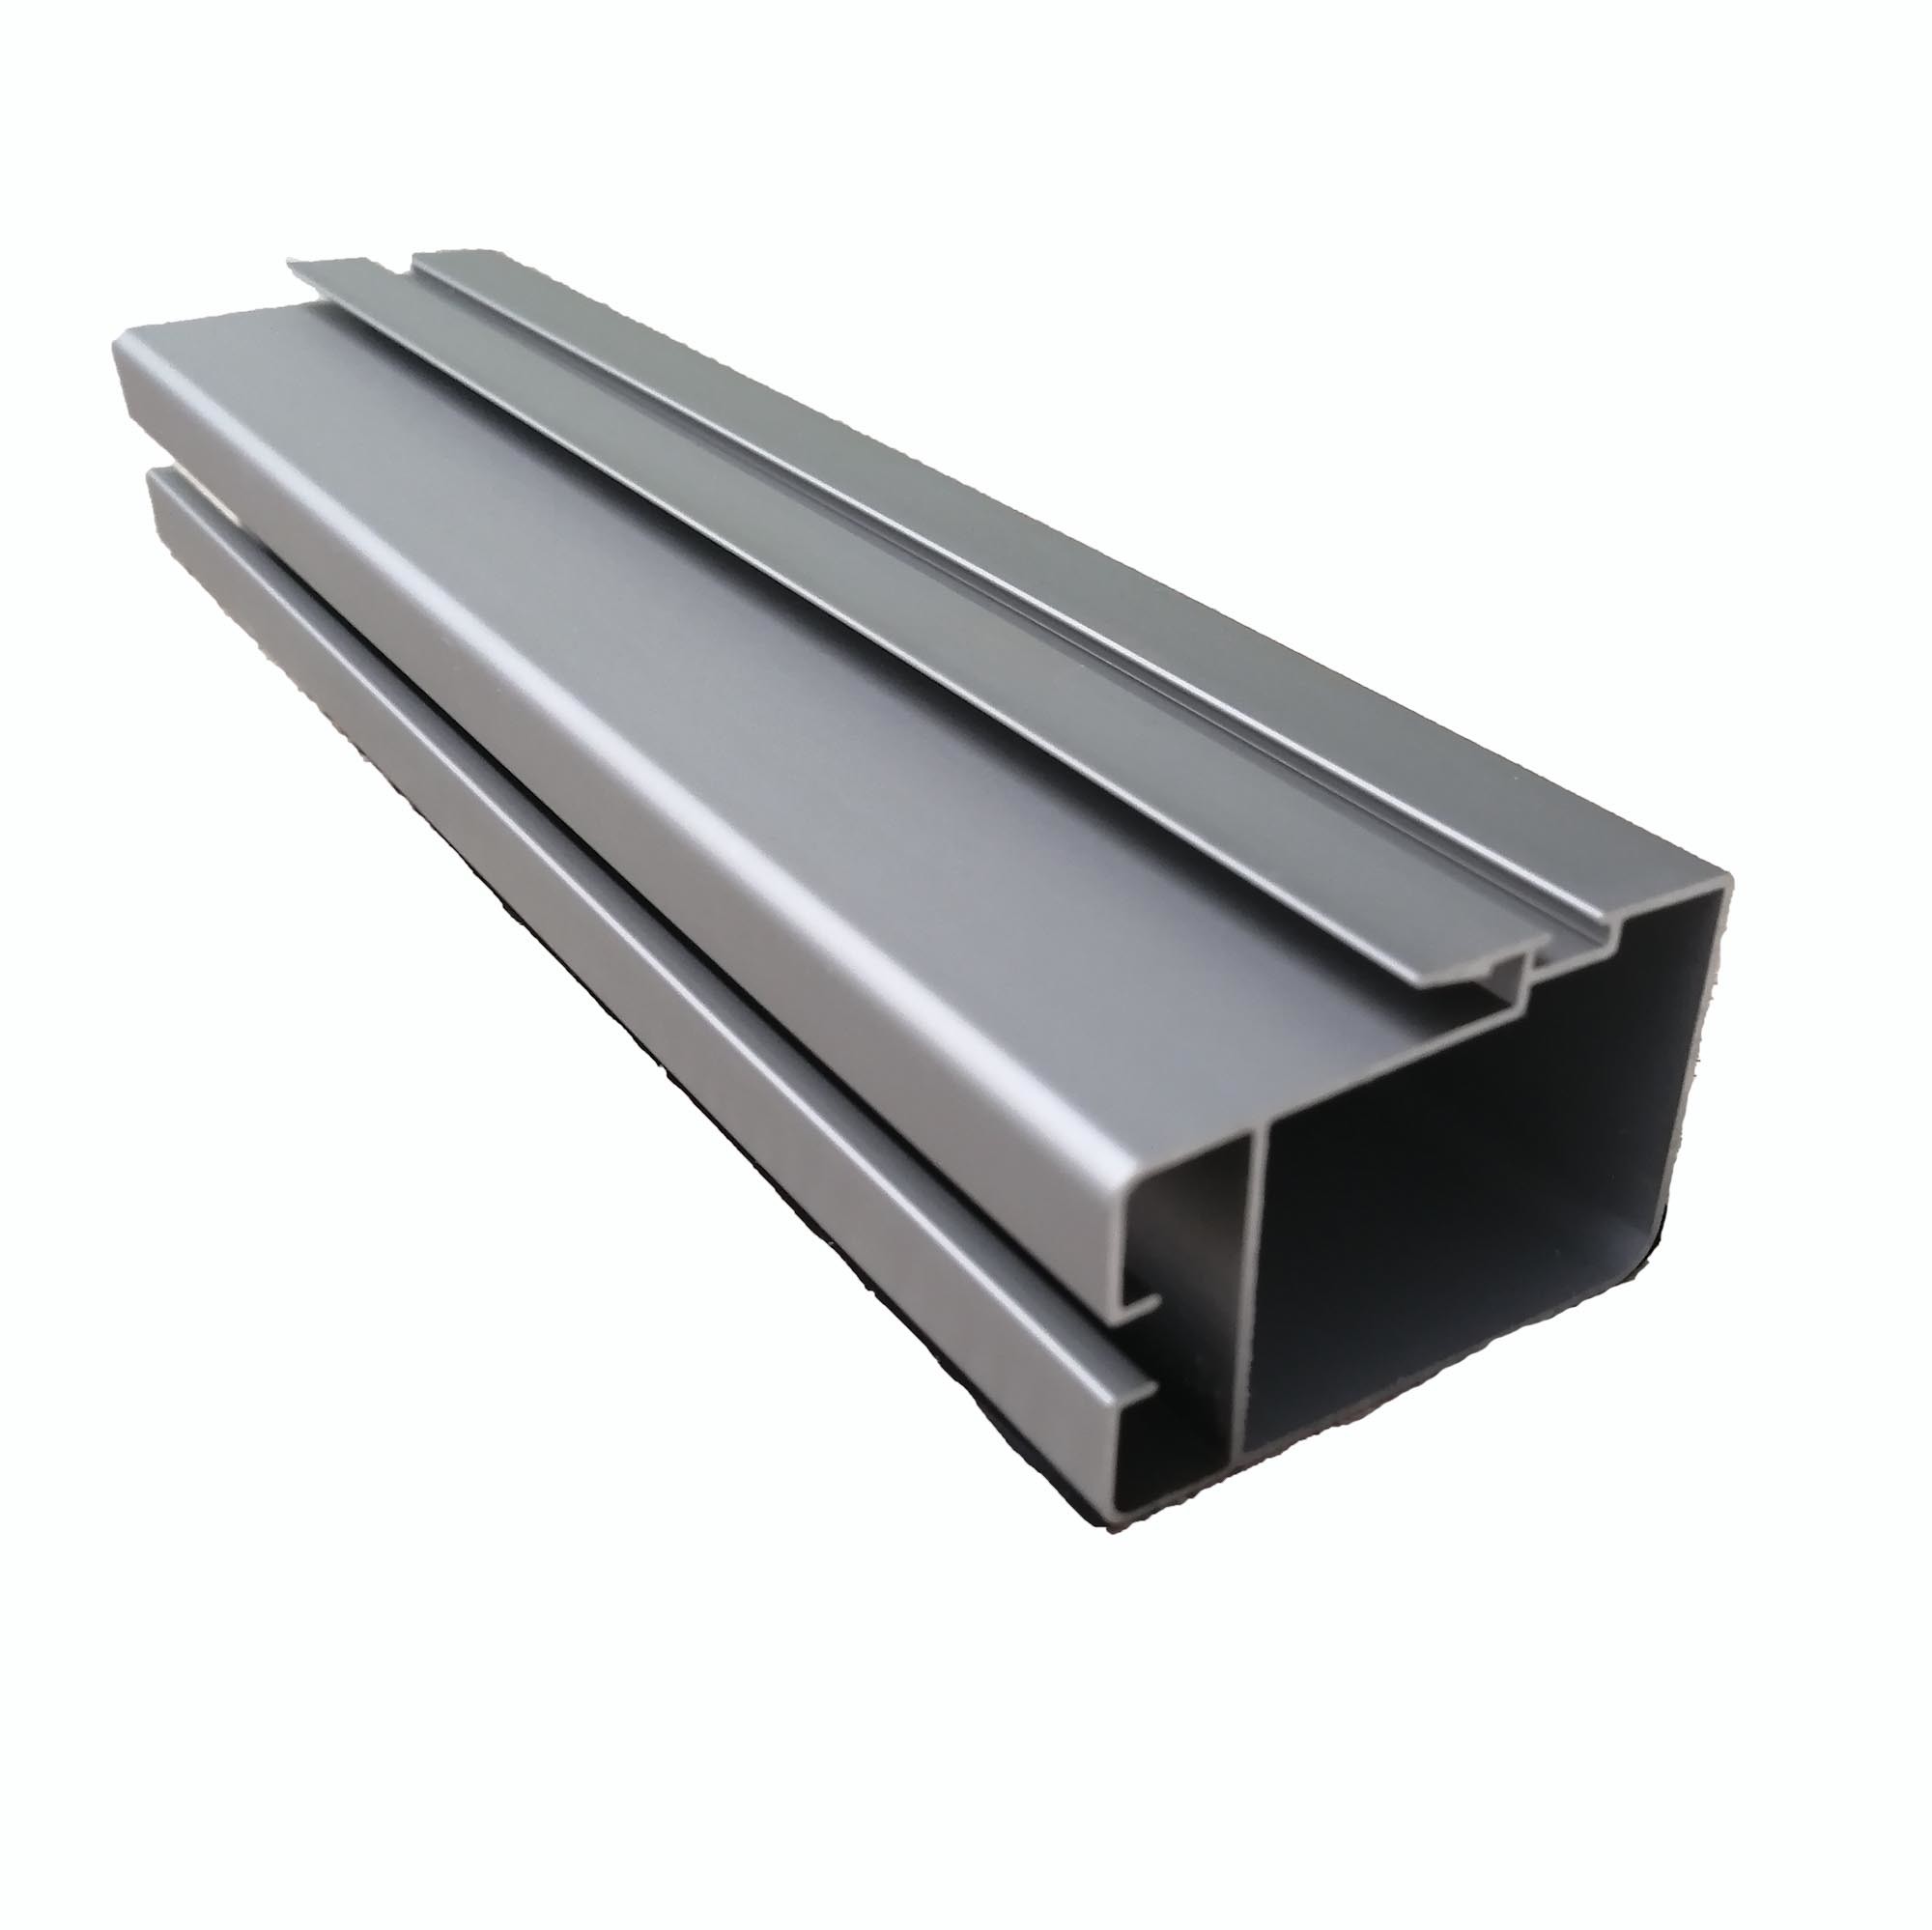 Best 1.2mm Windows Sliding Track Aluminium Extrusion Profiles Non Thermal Break Type wholesale